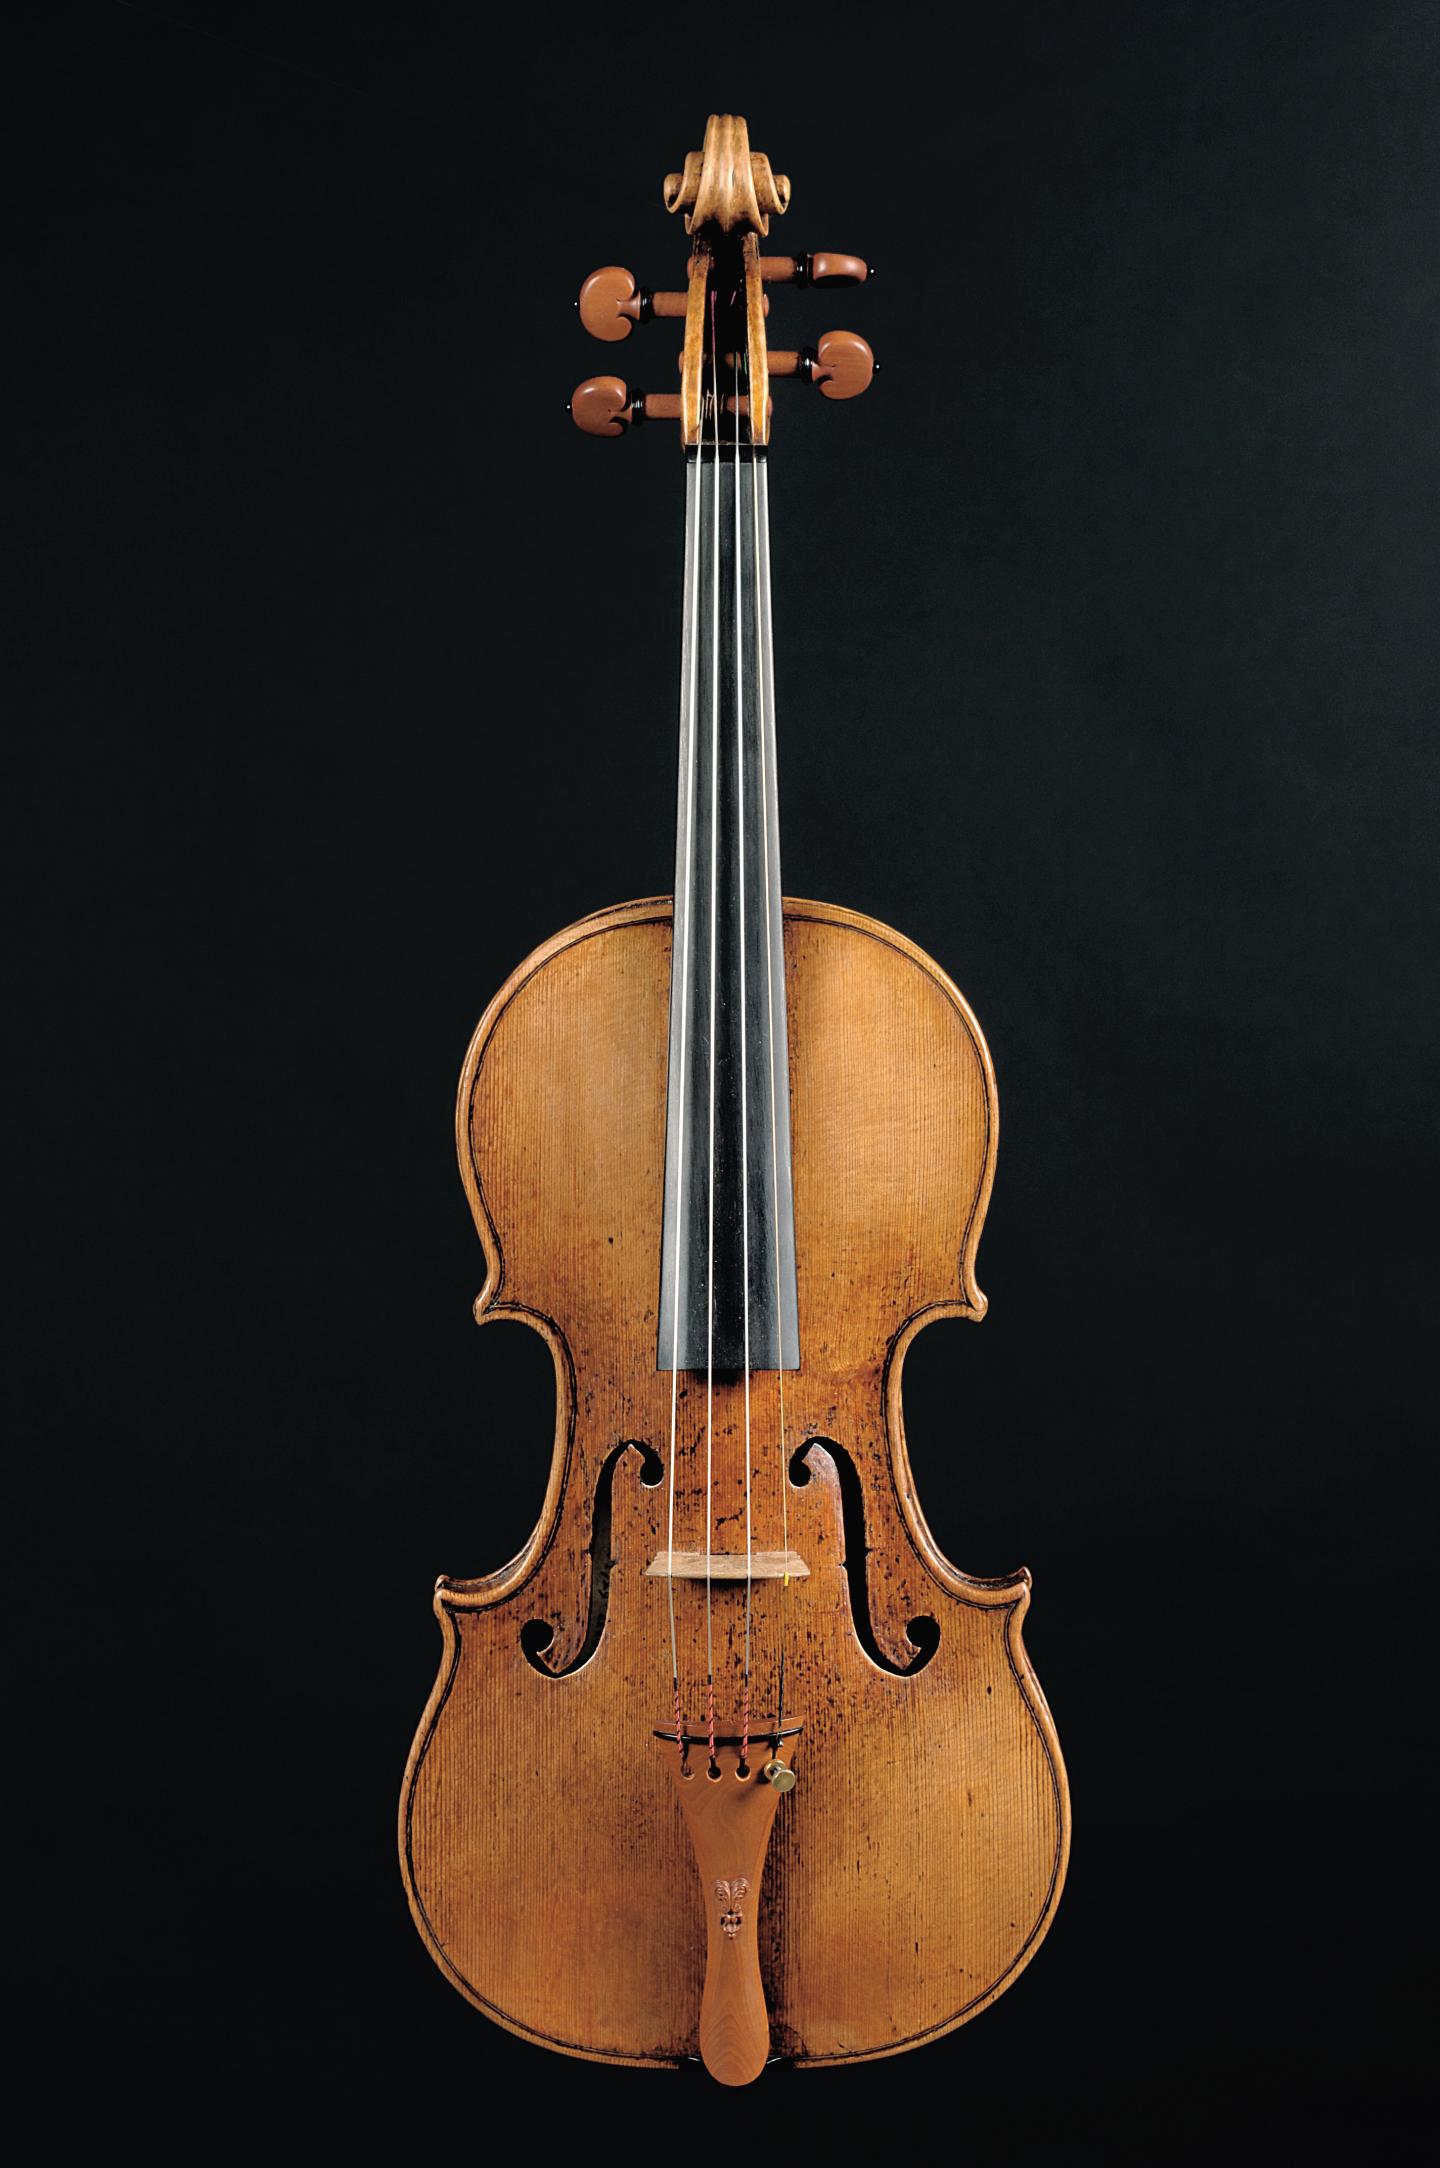 overdrive rod Isolere Violin varnish: Key to a fiddle's tone | EurekAlert!